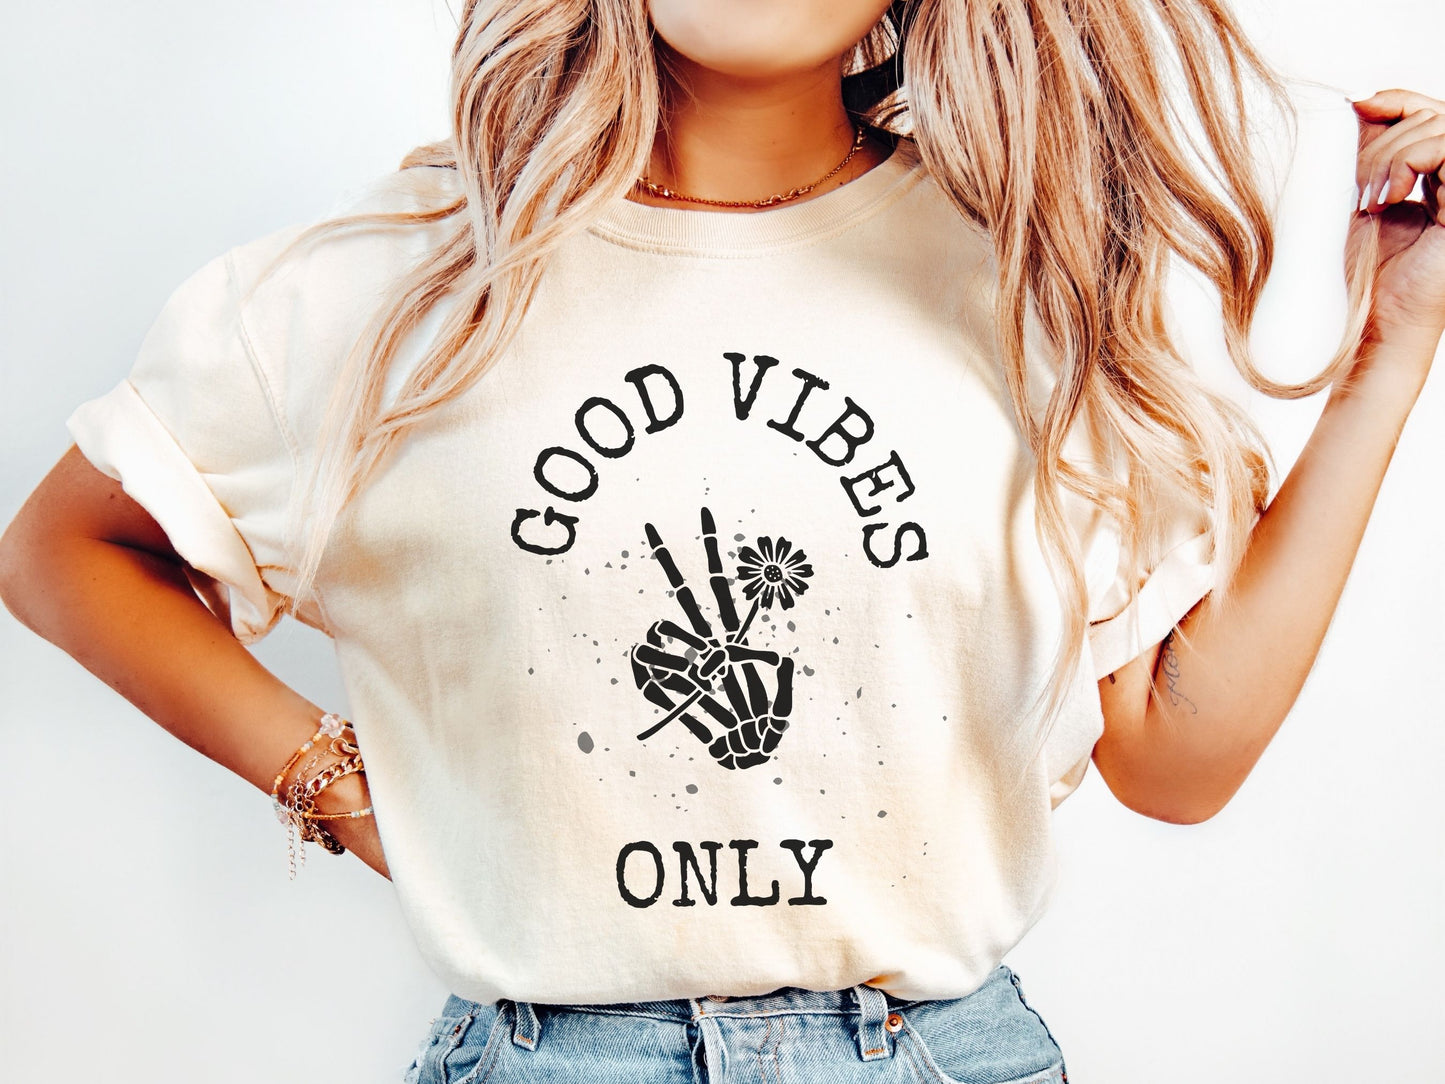 Good Vibes Only T-Shirt - Black Writing